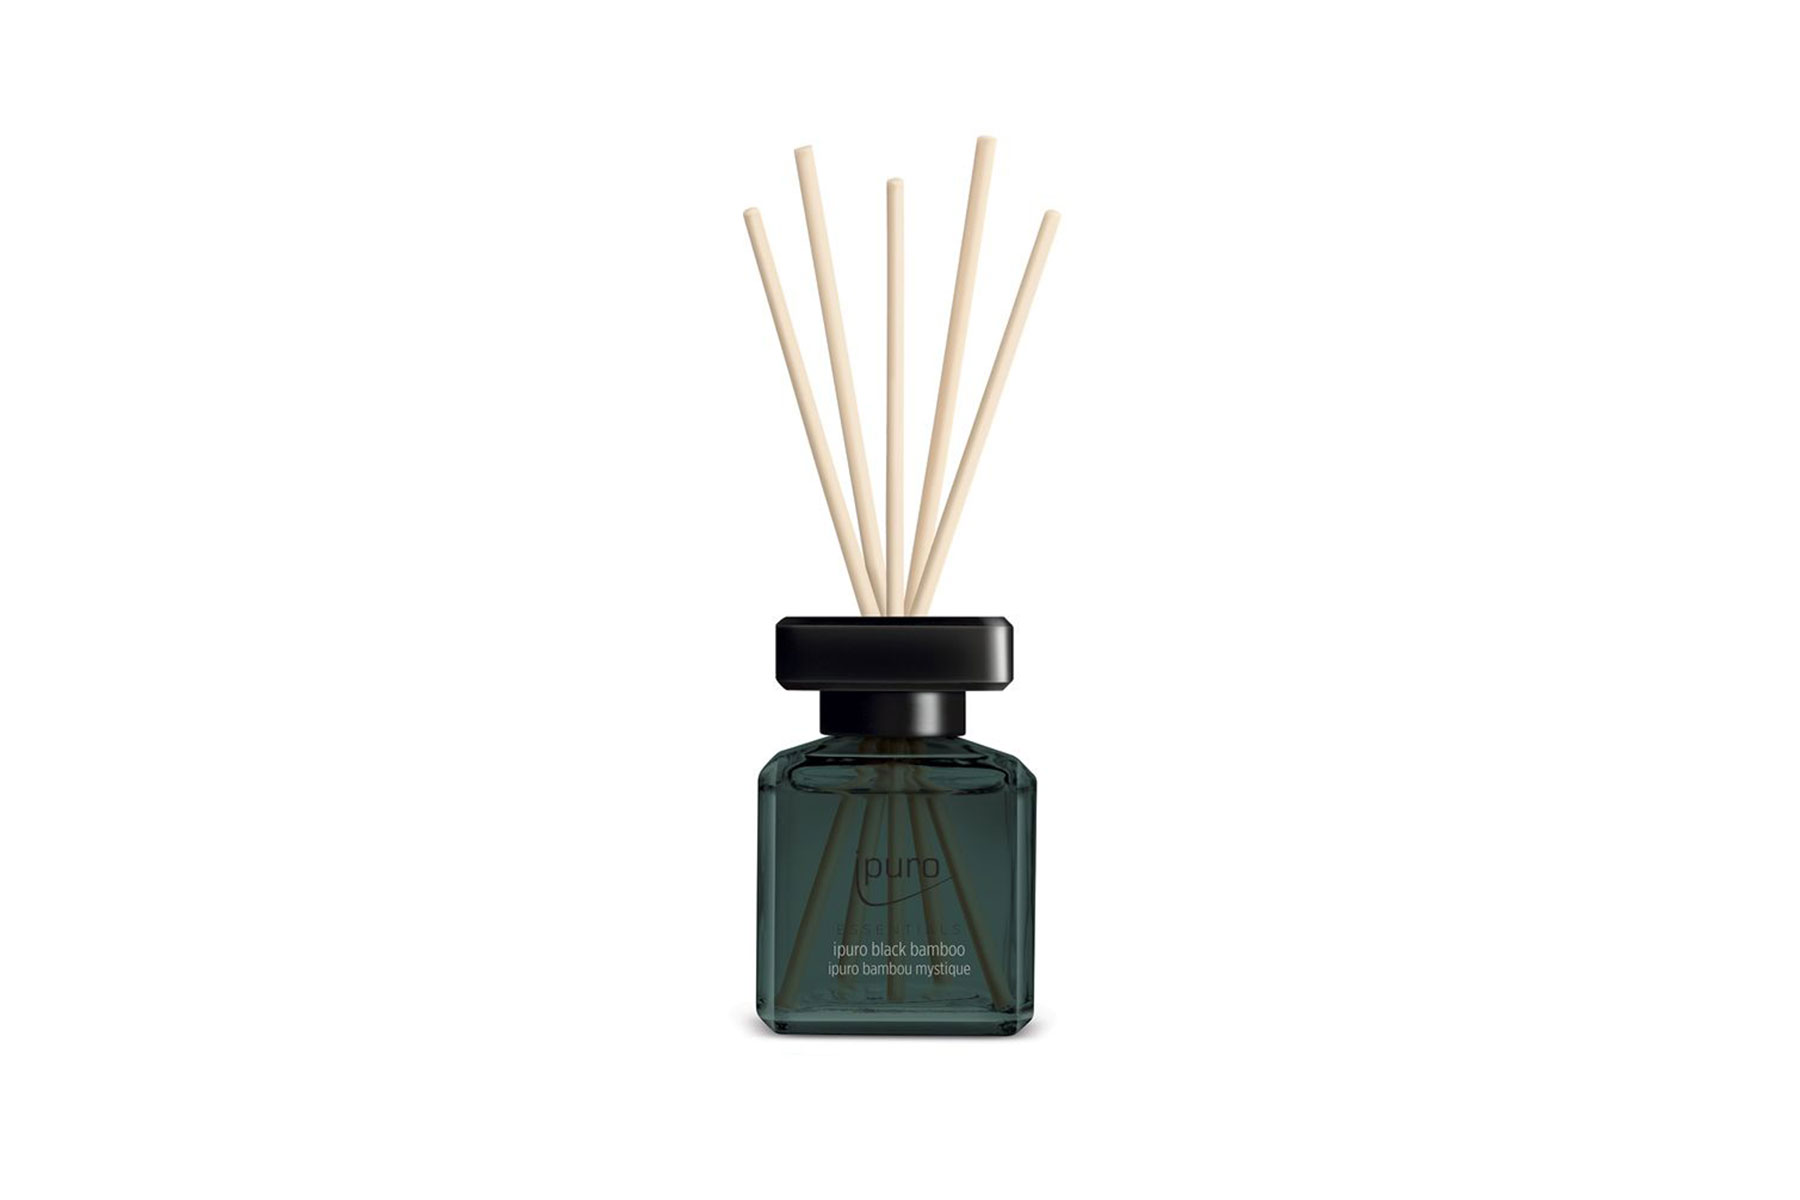 ipuro Diffuser Bamboo – Black, 200 ml : : Home & Kitchen